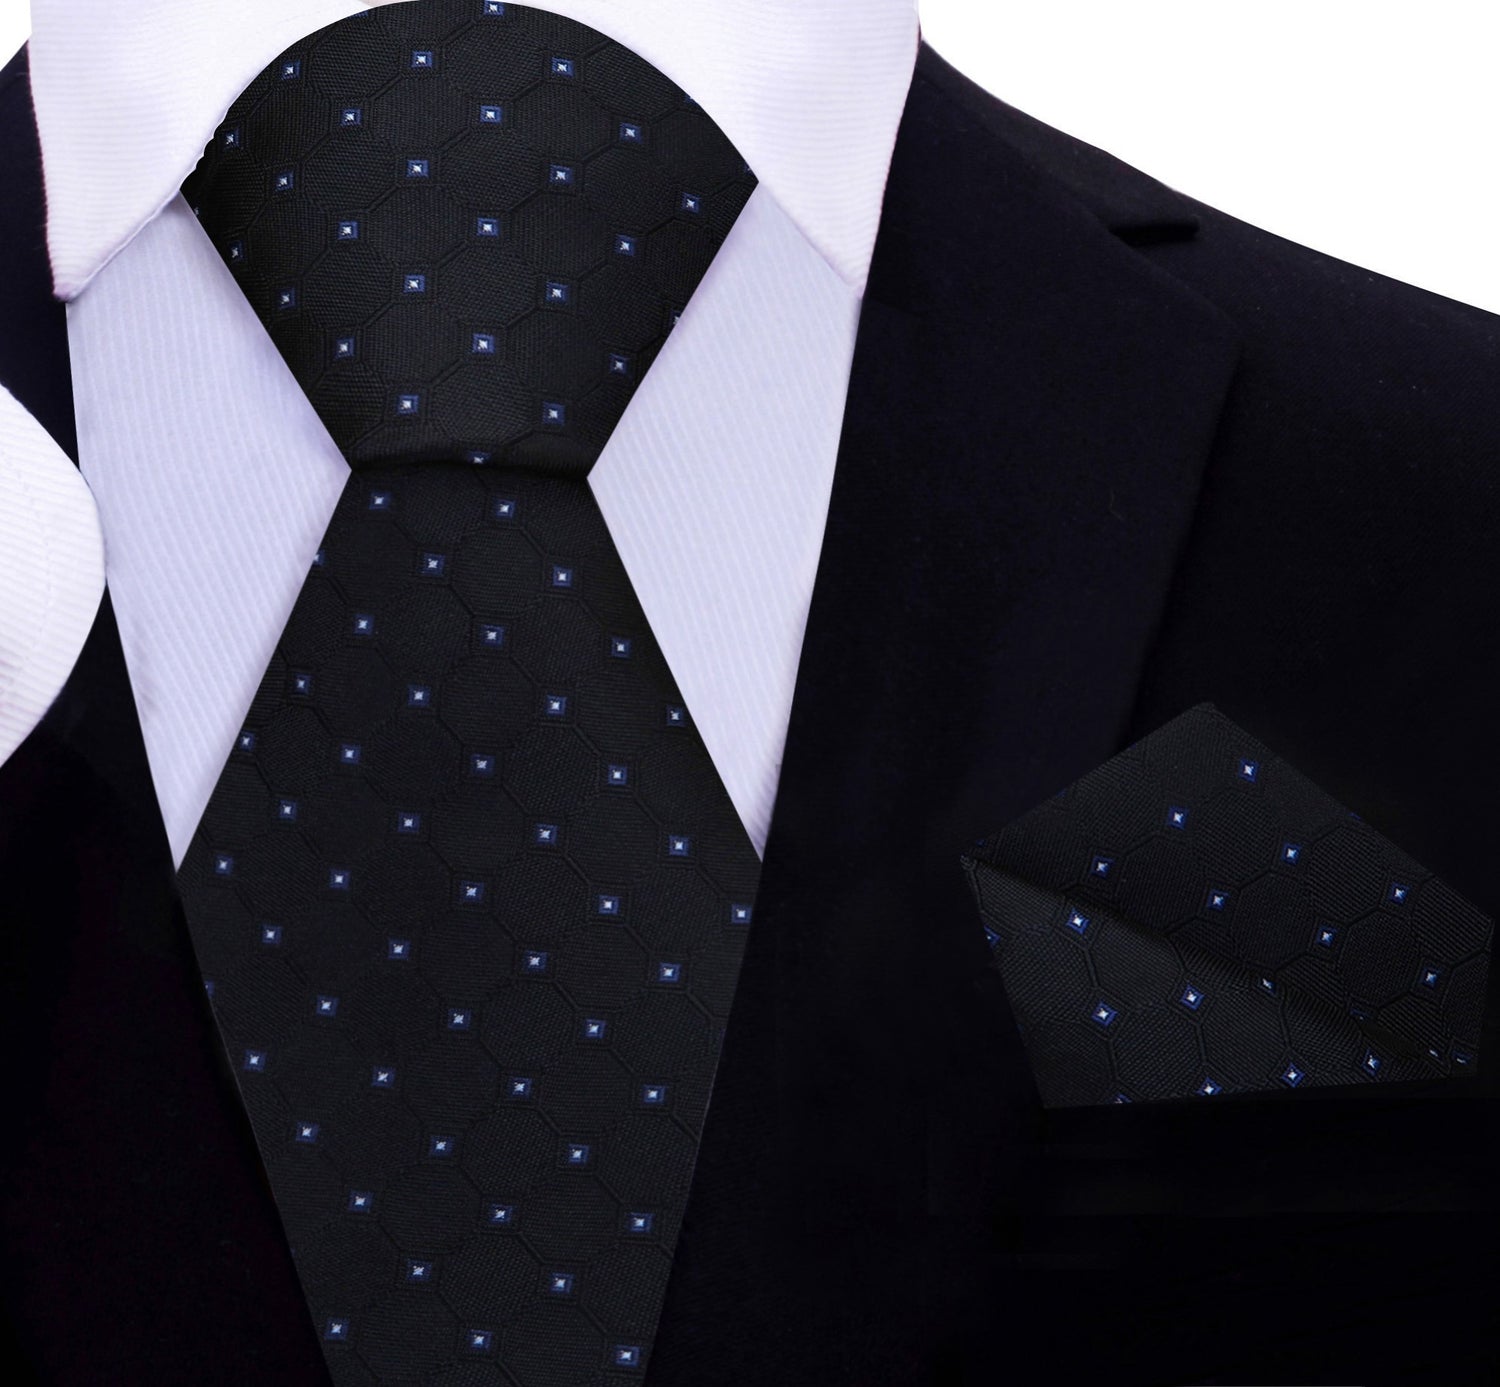 A Black, White Geometric Texture With Small Black, White Checks Silk Necktie, Pocket Square